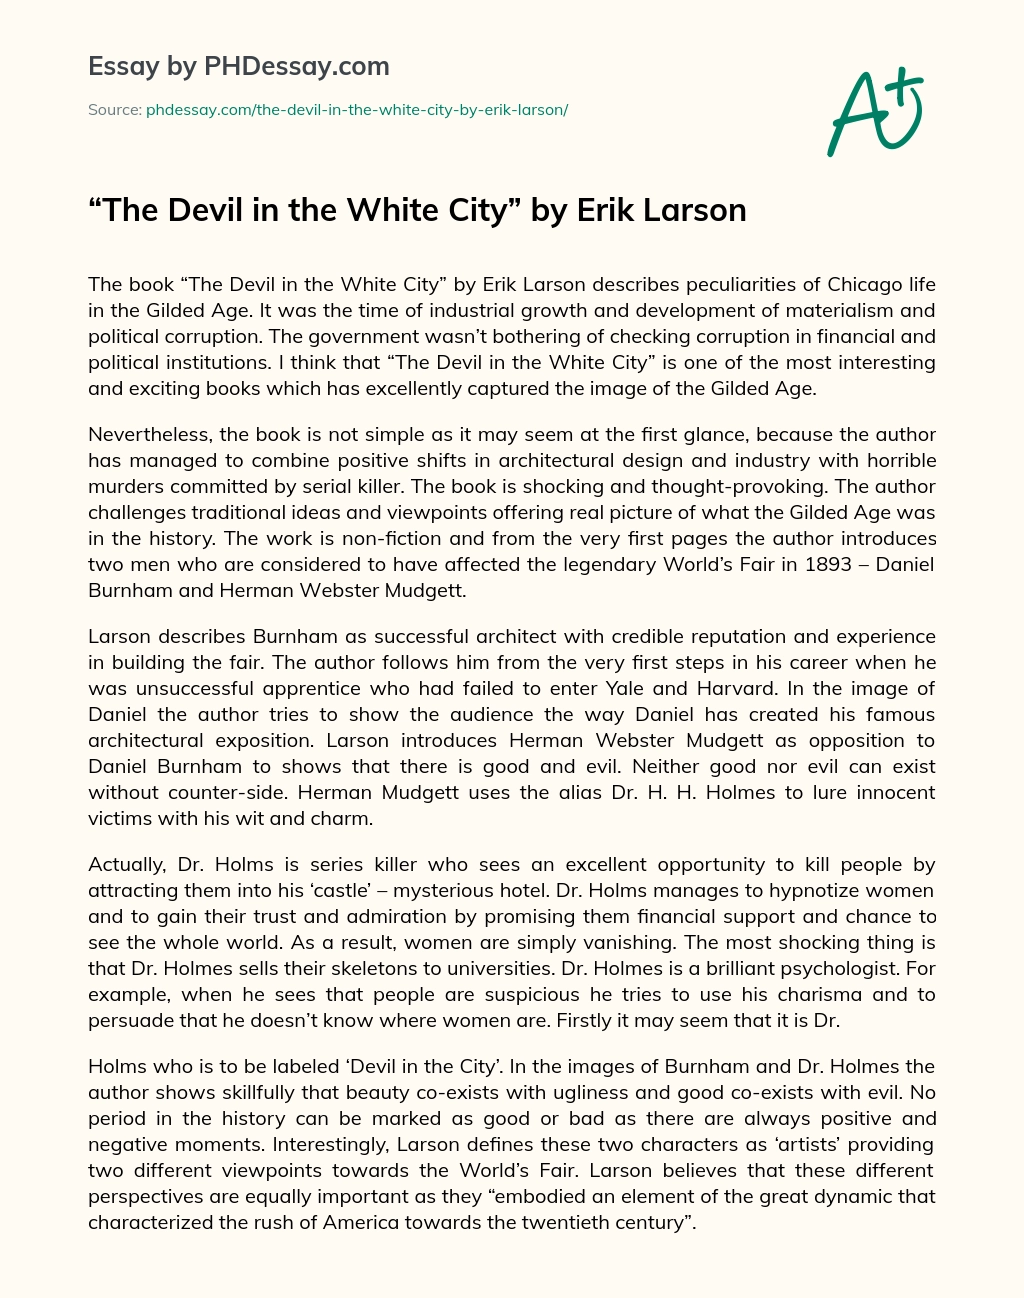 The Devil in the White City by Erik Larson essay